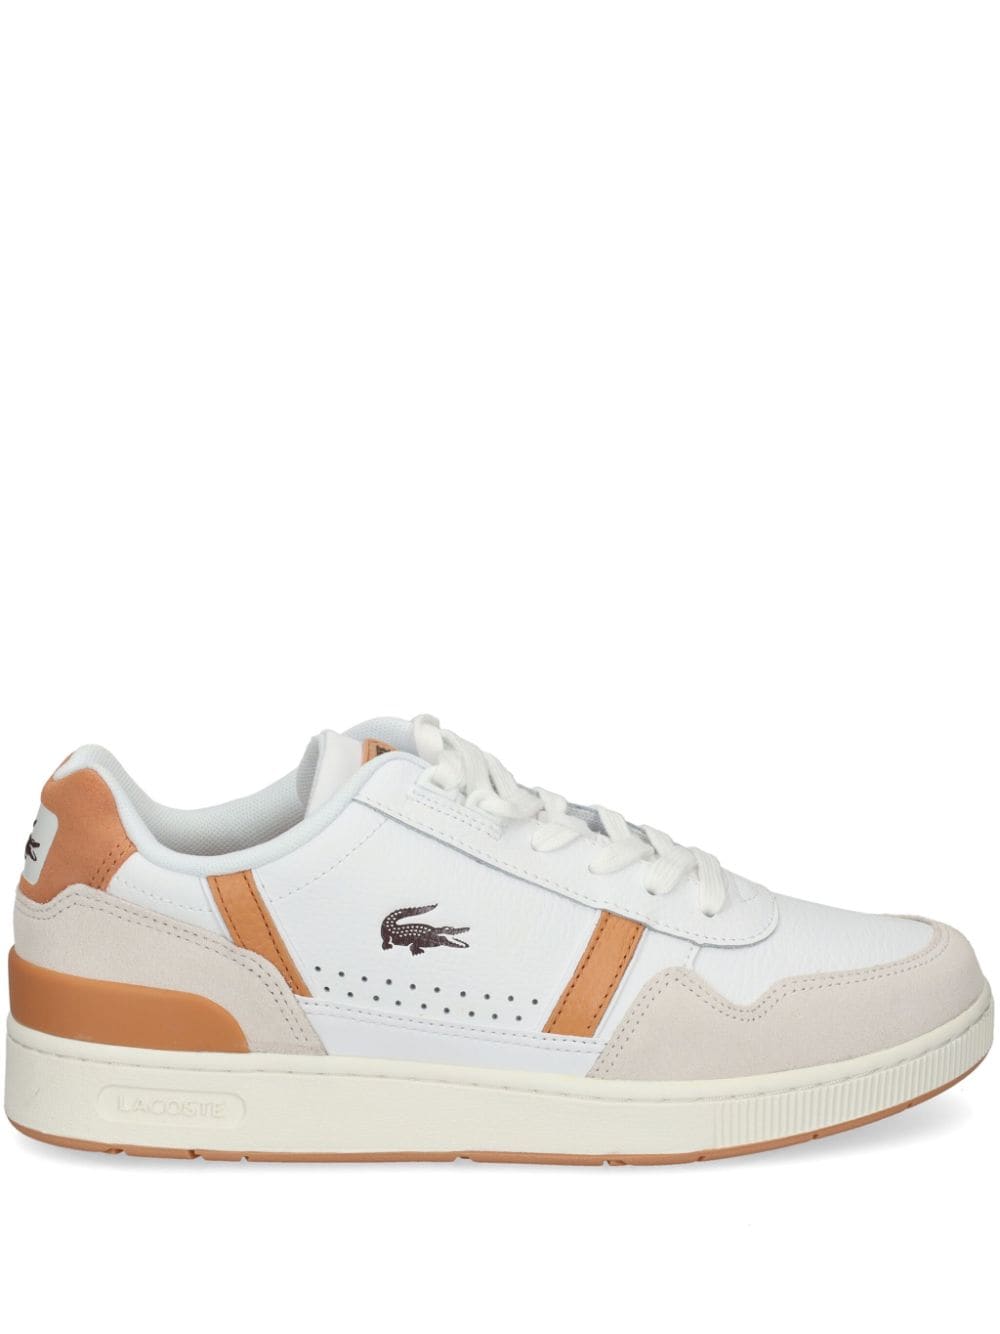 Lacoste T-Clip leather sneakers - White von Lacoste